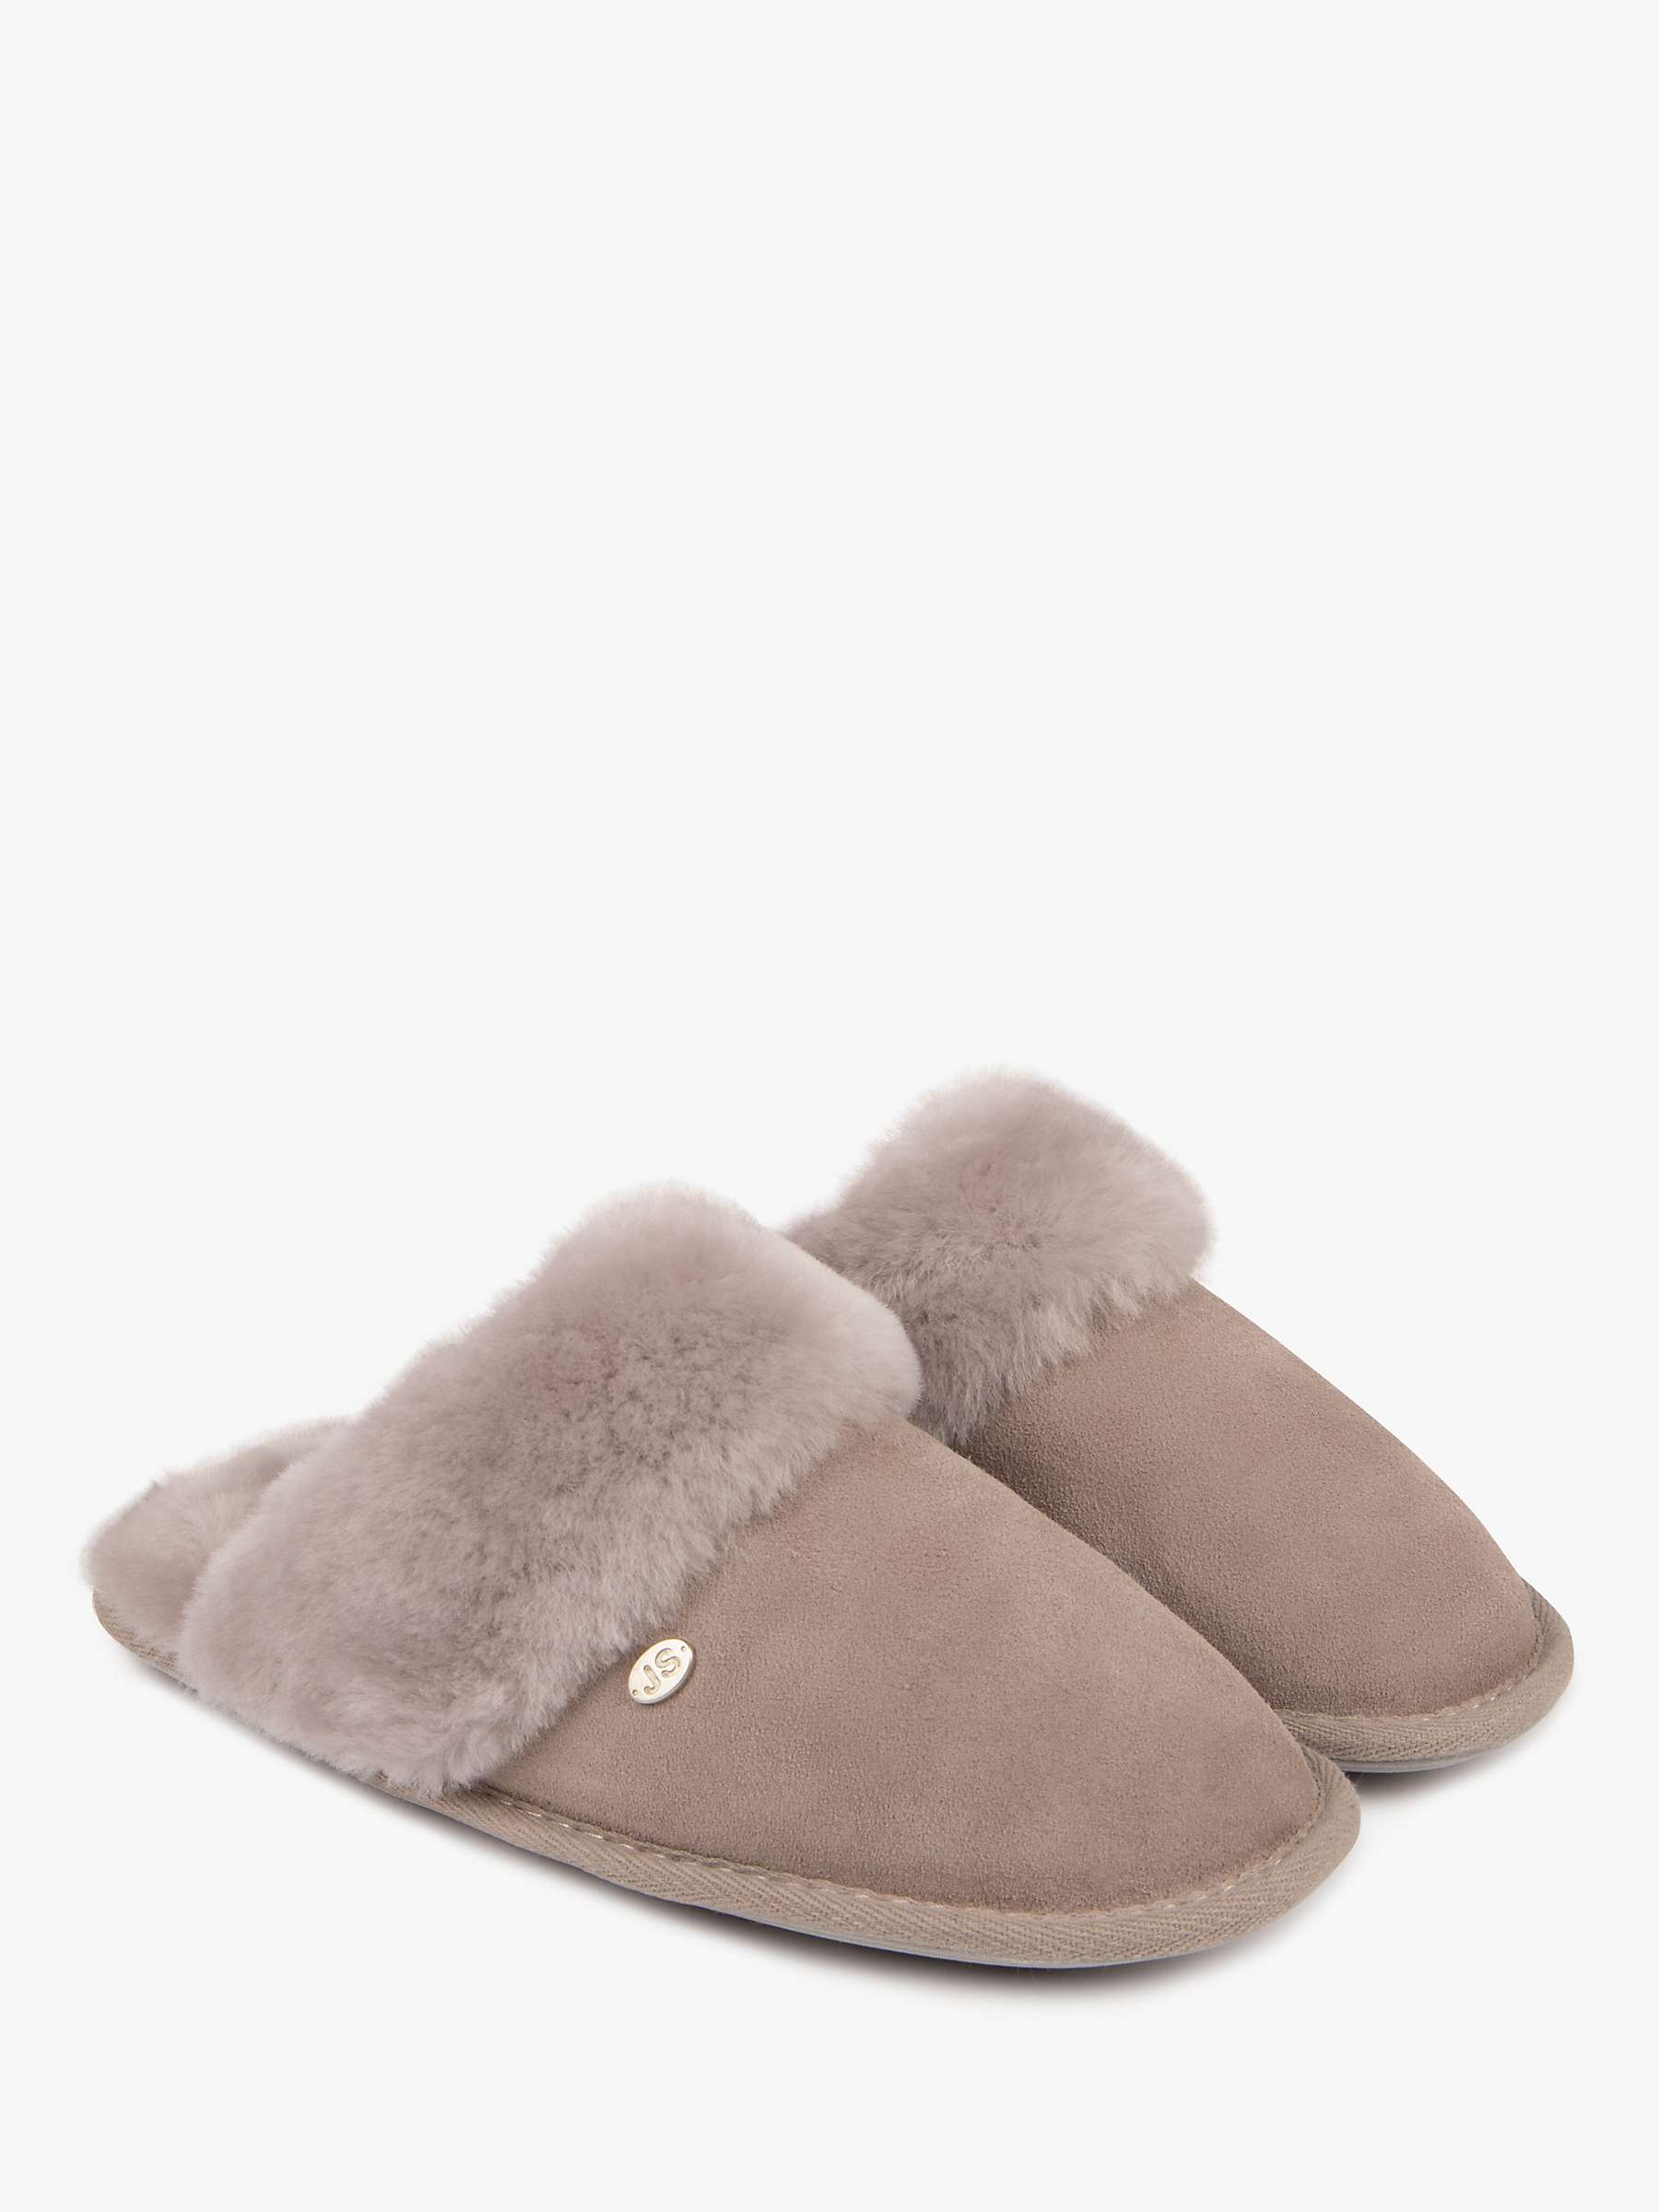 Buy Just Sheepskin Duchess Mule Slippers Online at johnlewis.com